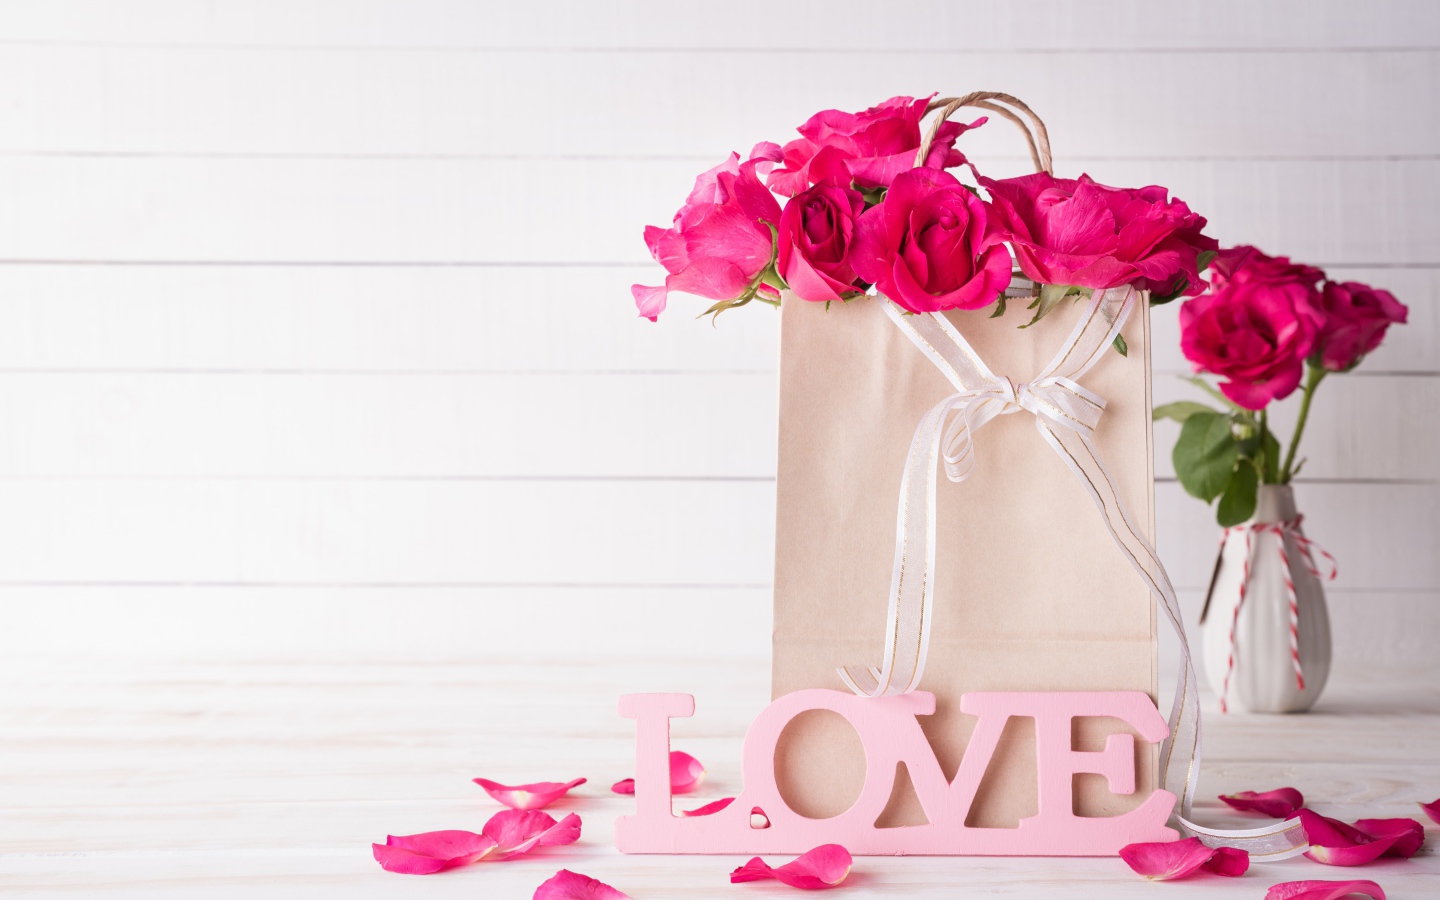 Пакет с розами на столе с надписью Love